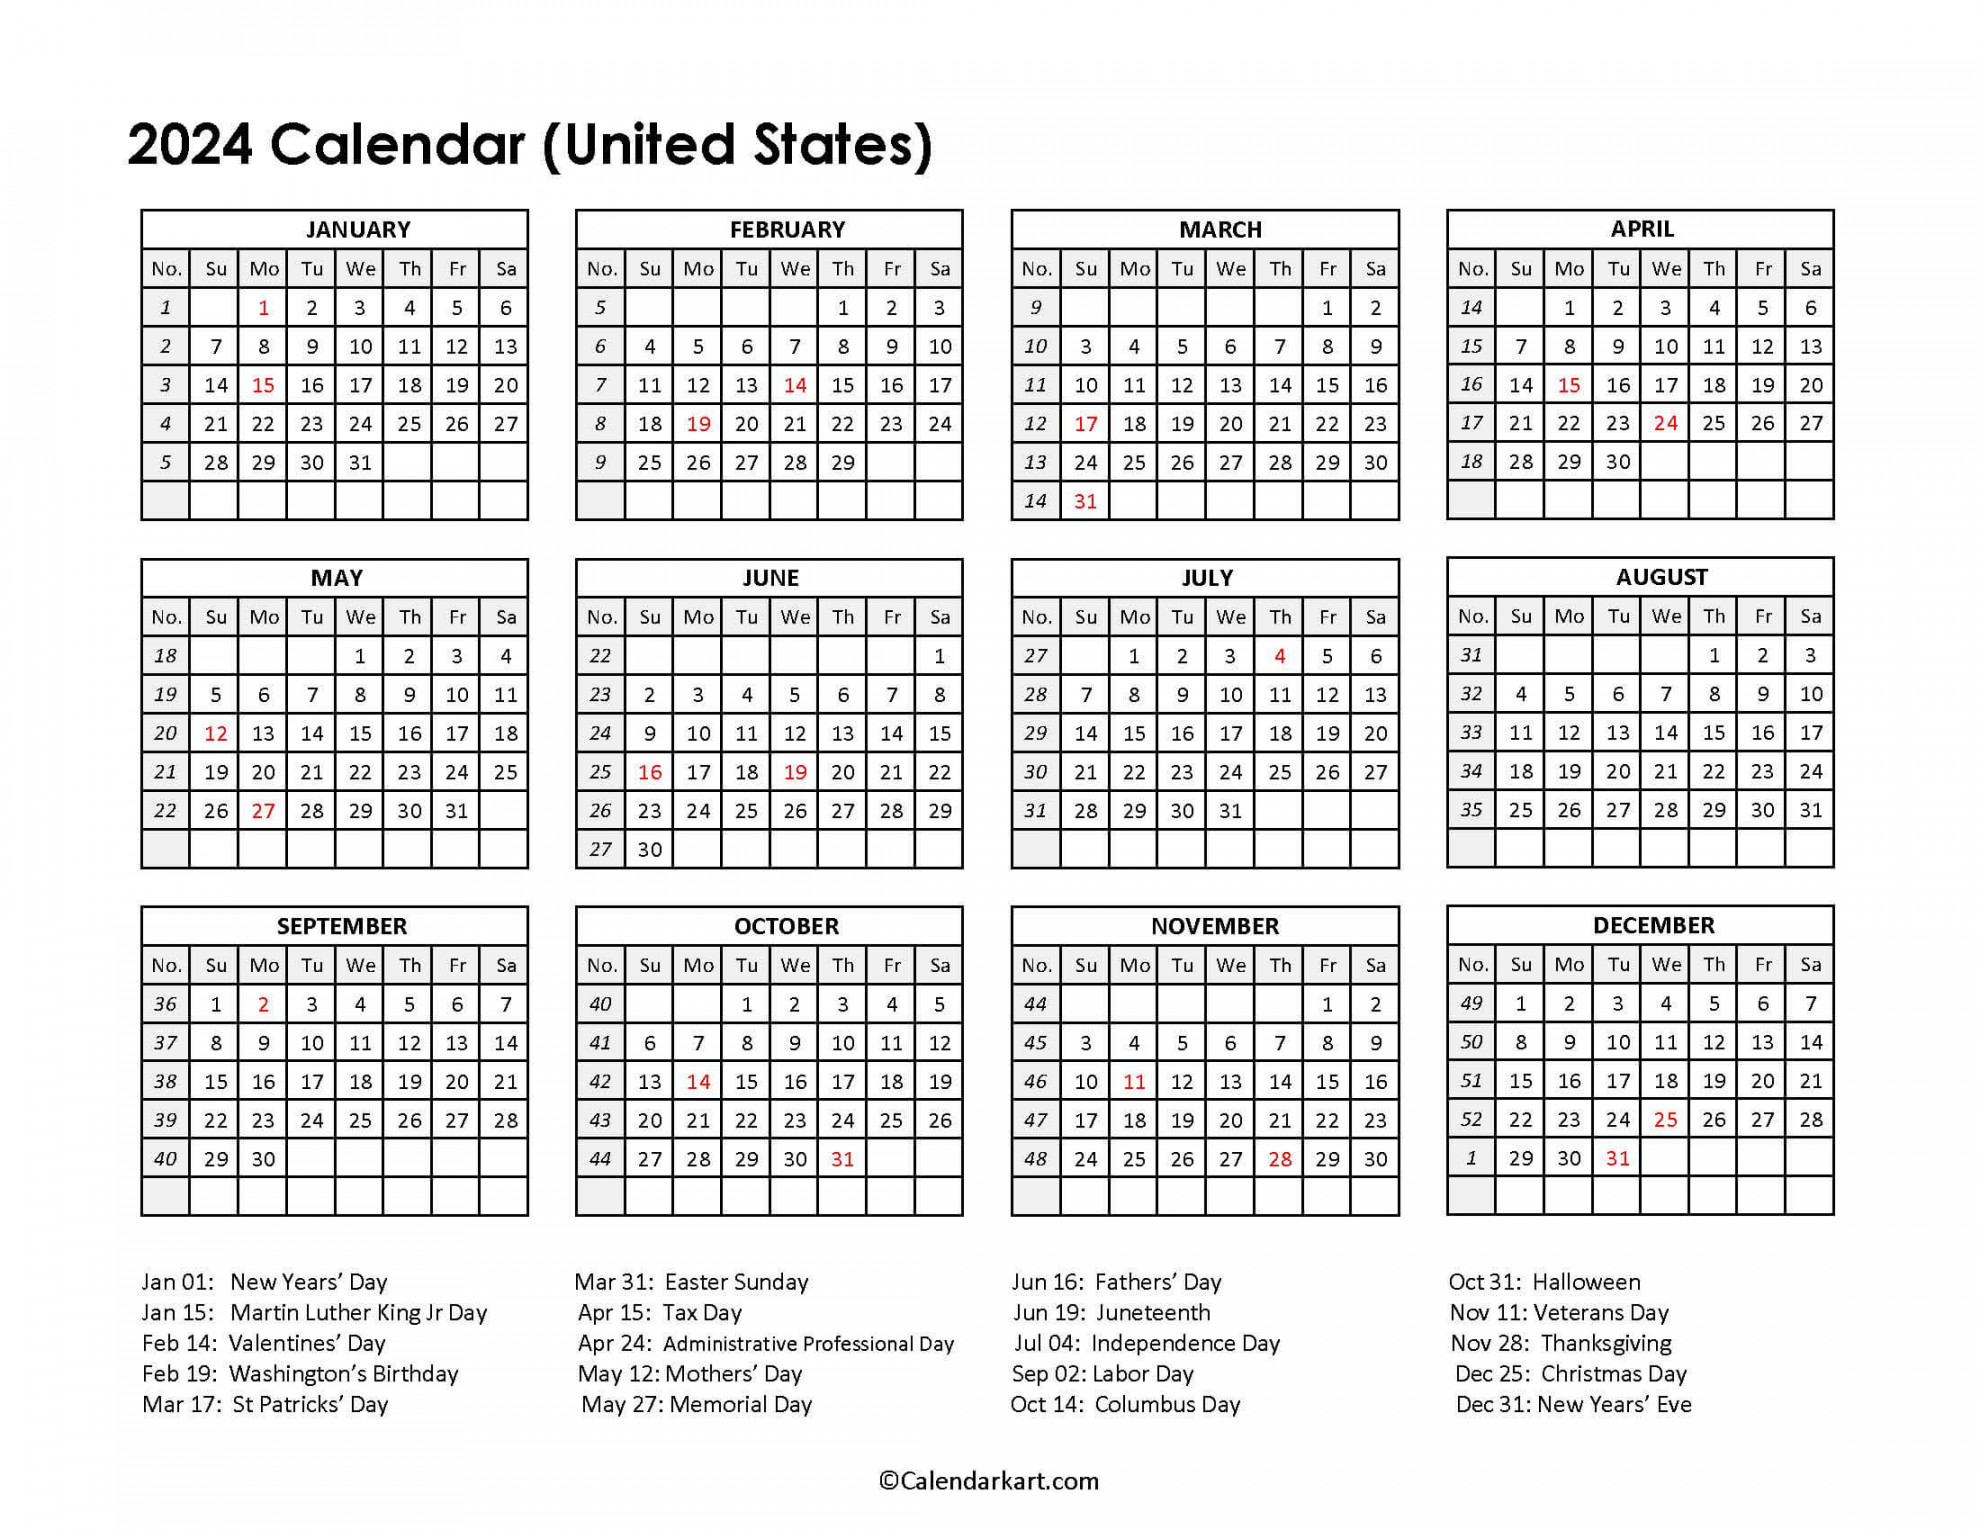 United States Calendars with Holidays - CalendarKart